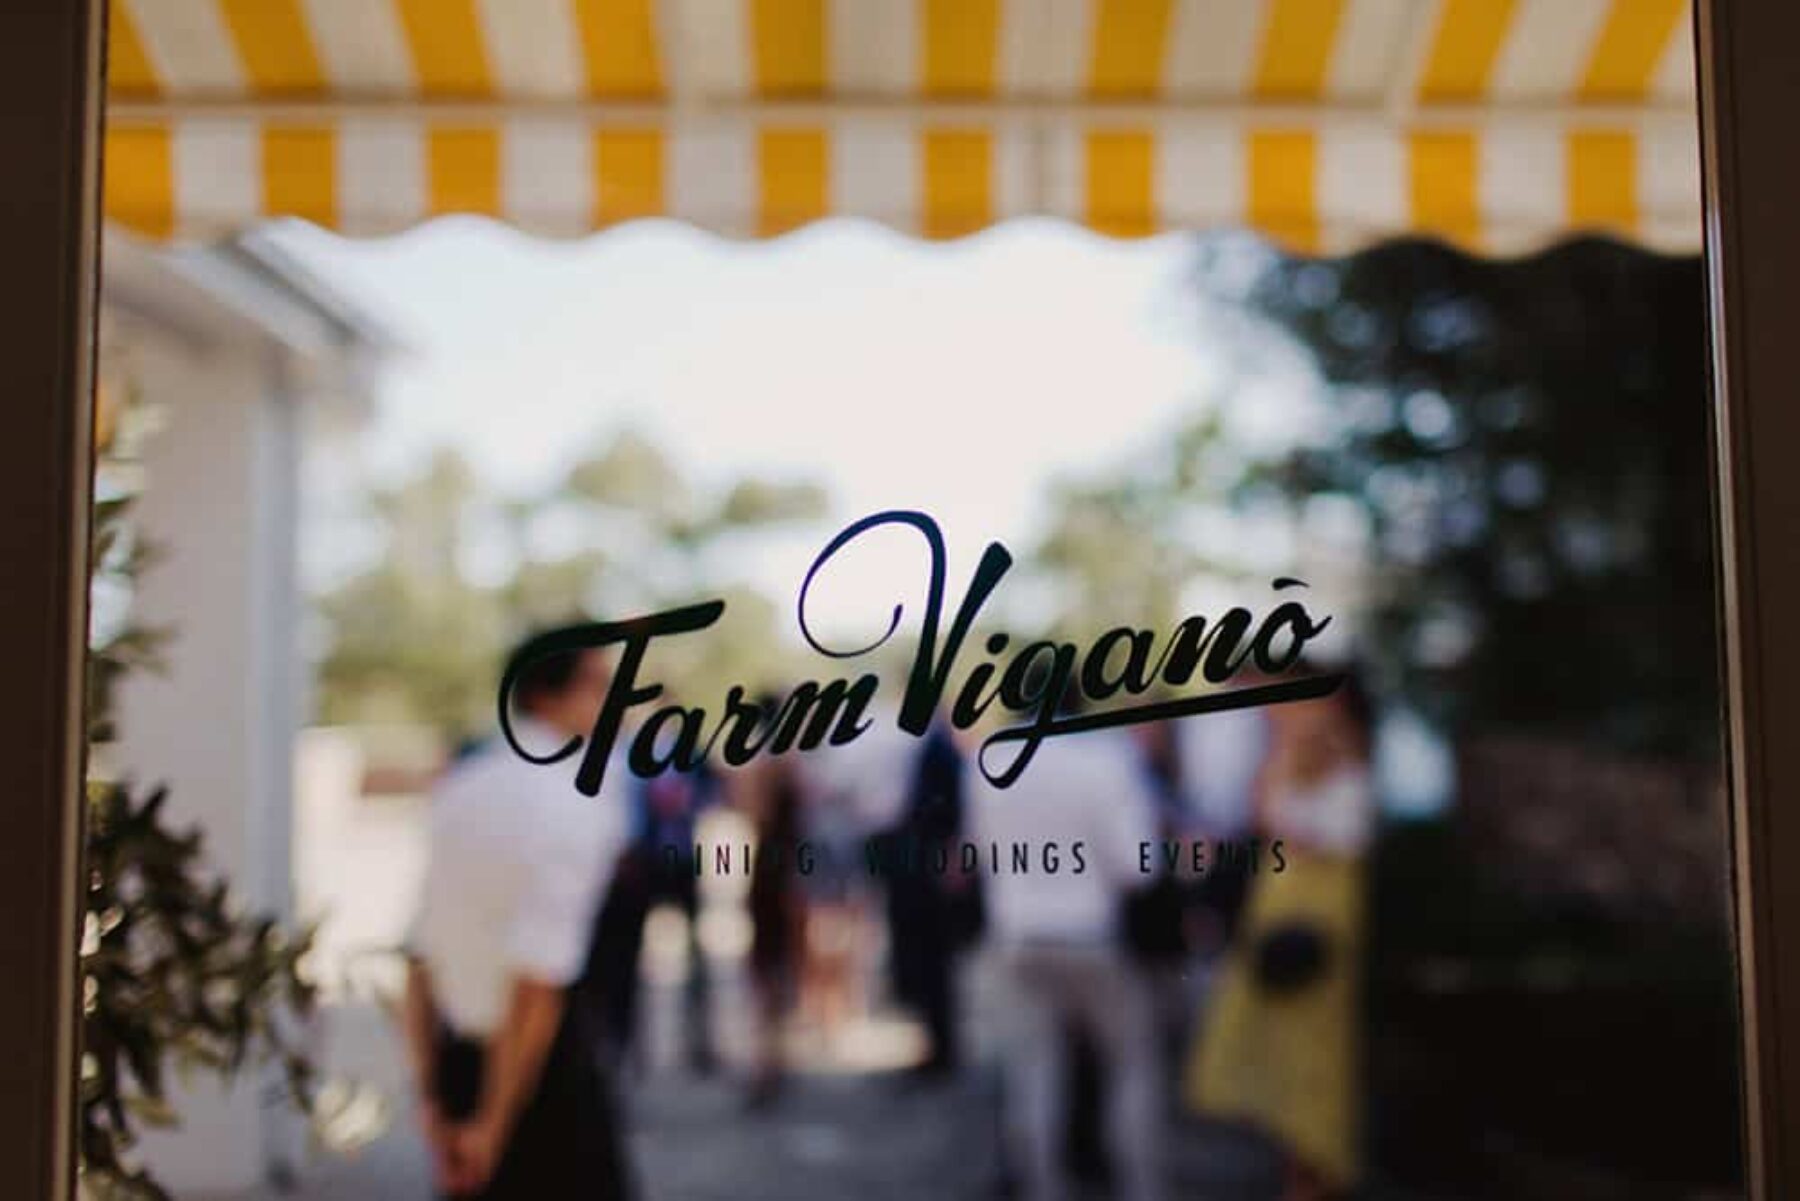 Farm Vigano wedding